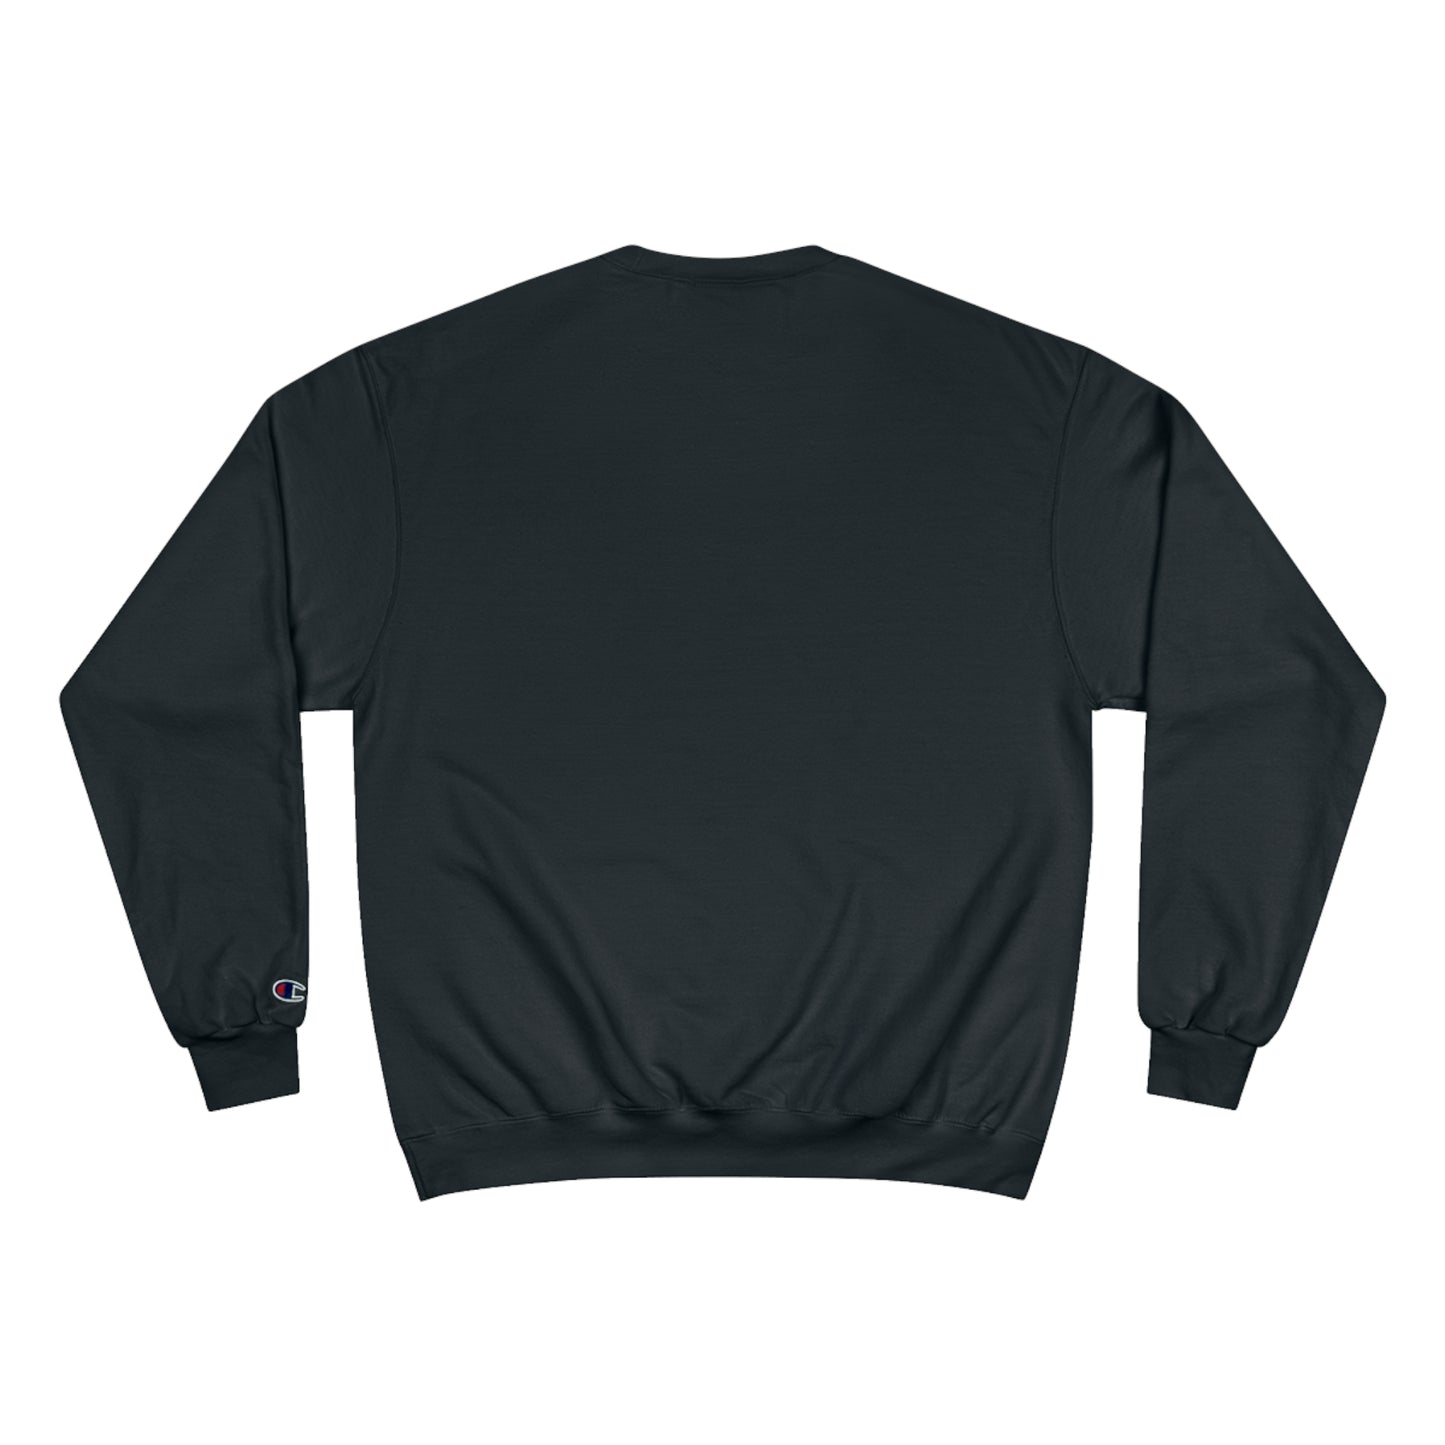 Anti-Burnout Behavior Crewneck Sweatshirt